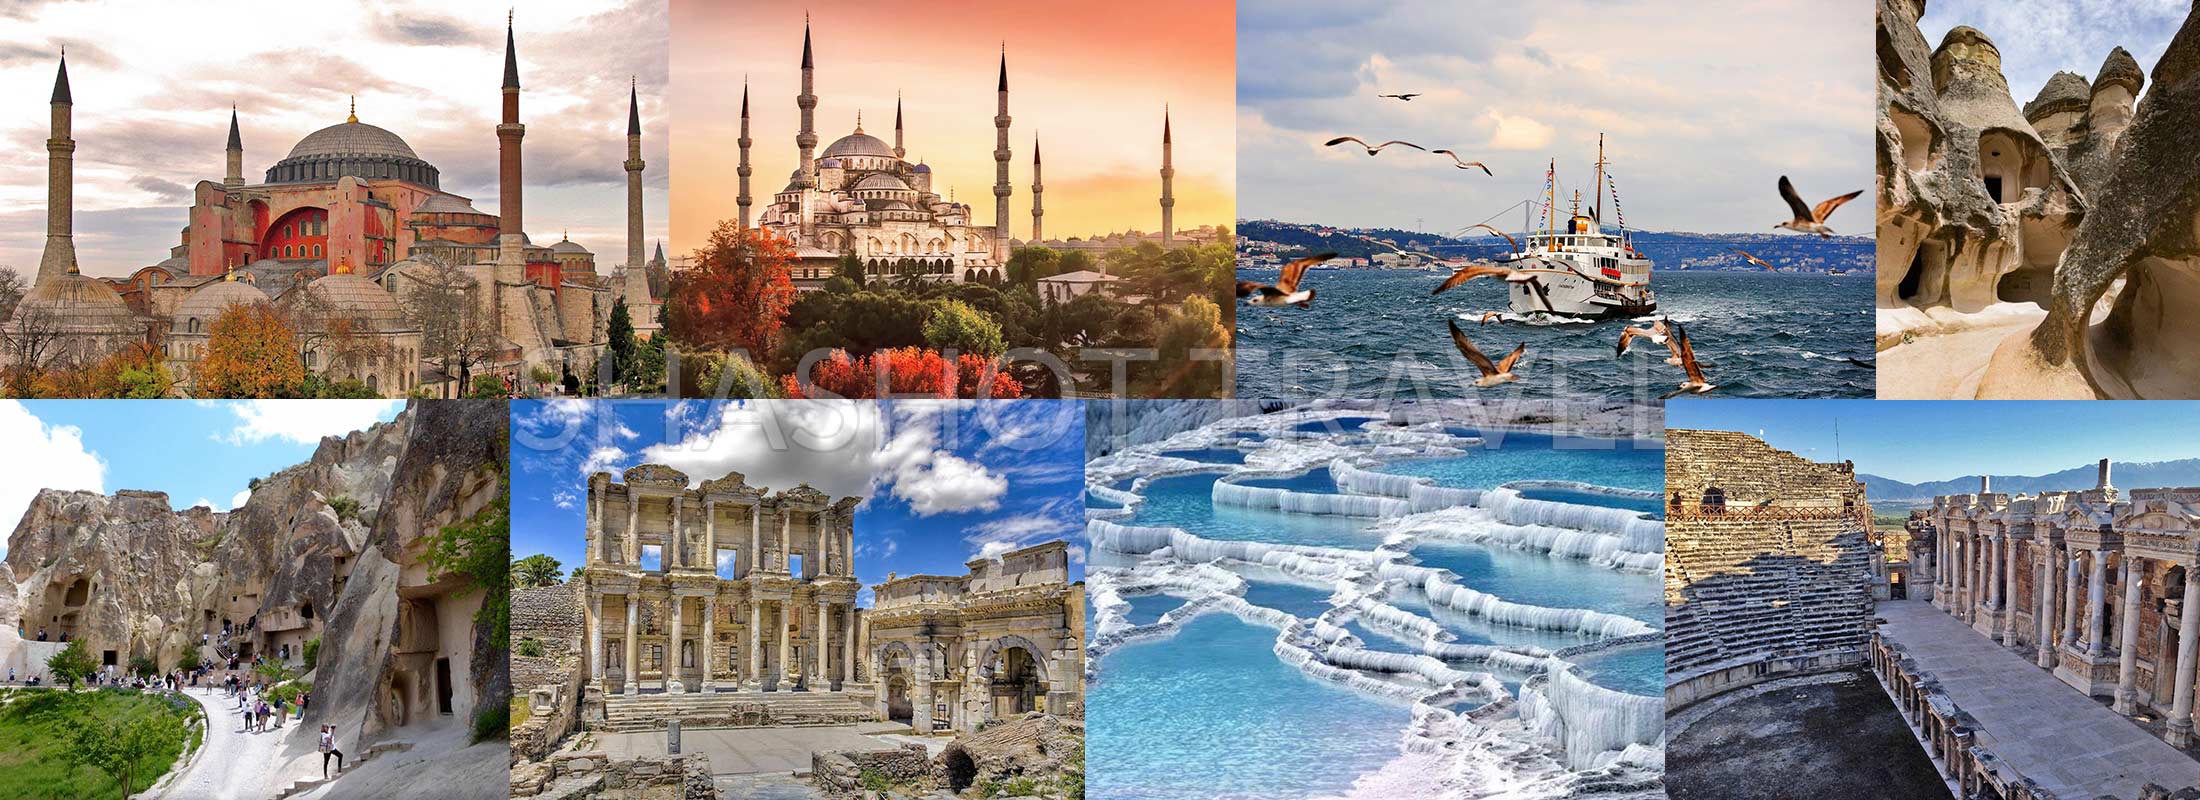 turkey-package-tours-8-days-istanbul-hagia-sophia-museum-blue-mosque-bosphorus-cappadocia-virgin-mary-hourse-ephesus-pamukkale-hierapolis